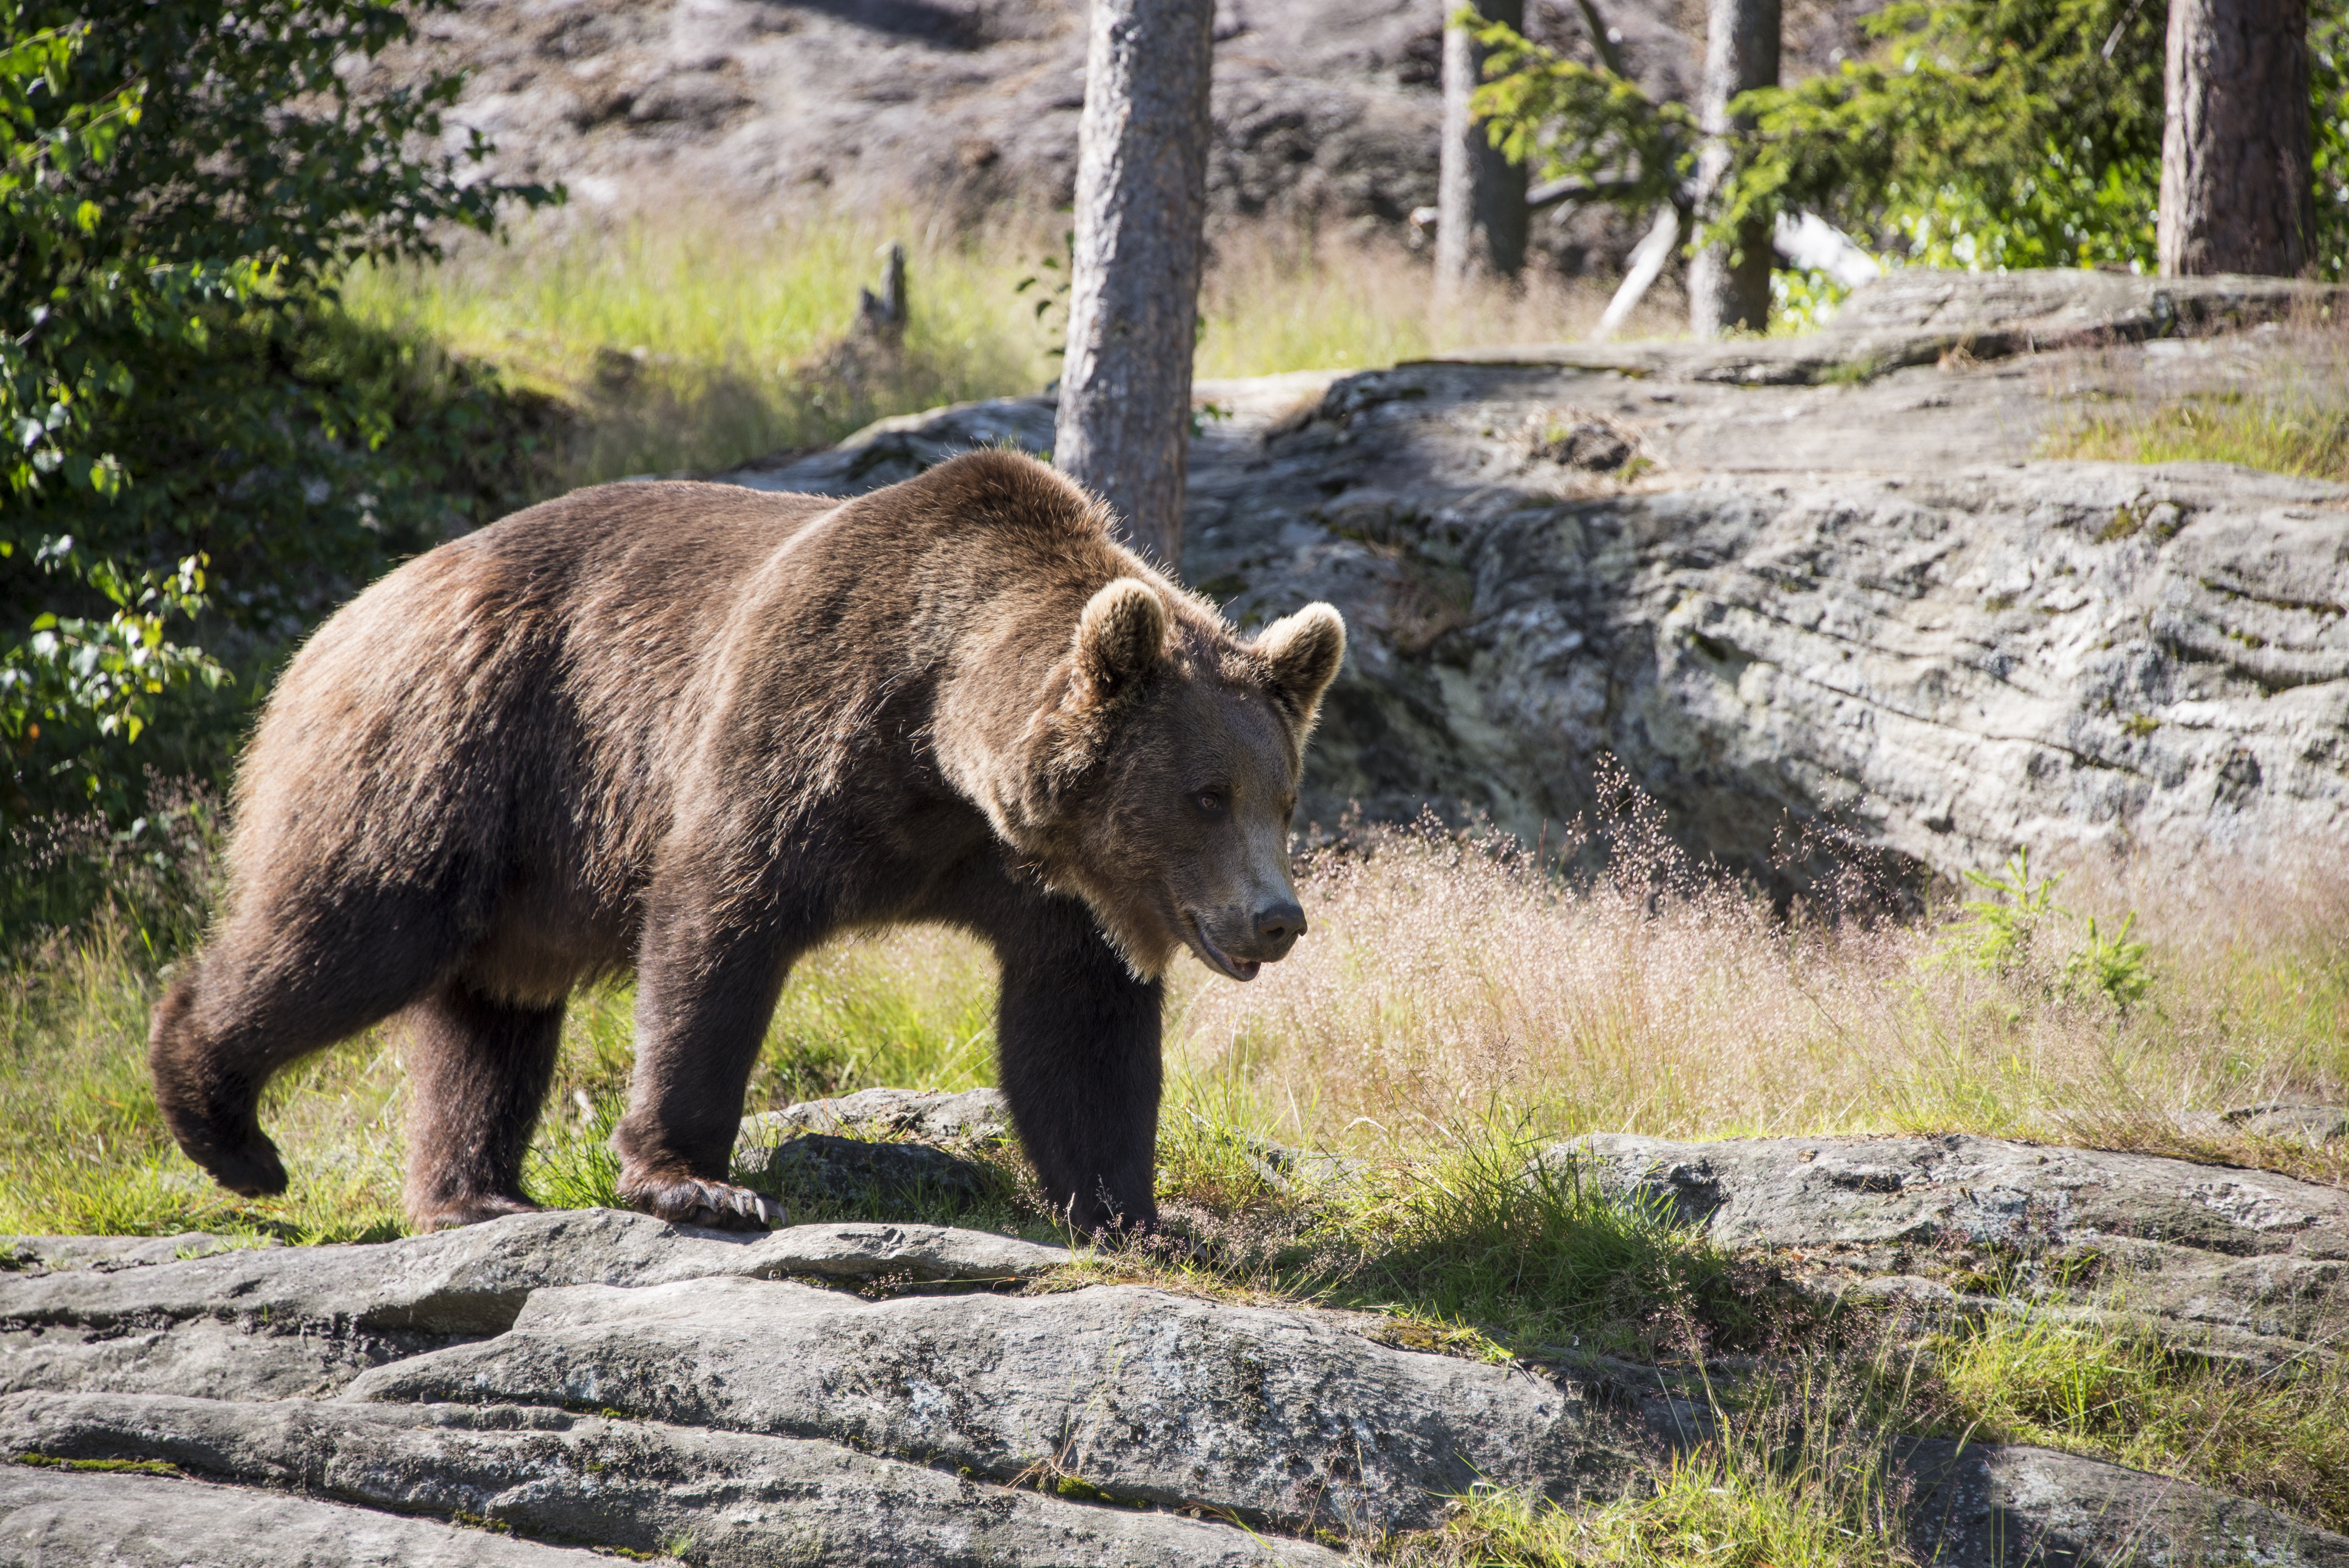 467974 descargar imagen animales, grizzly, oso pardo, osos: fondos de pantalla y protectores de pantalla gratis